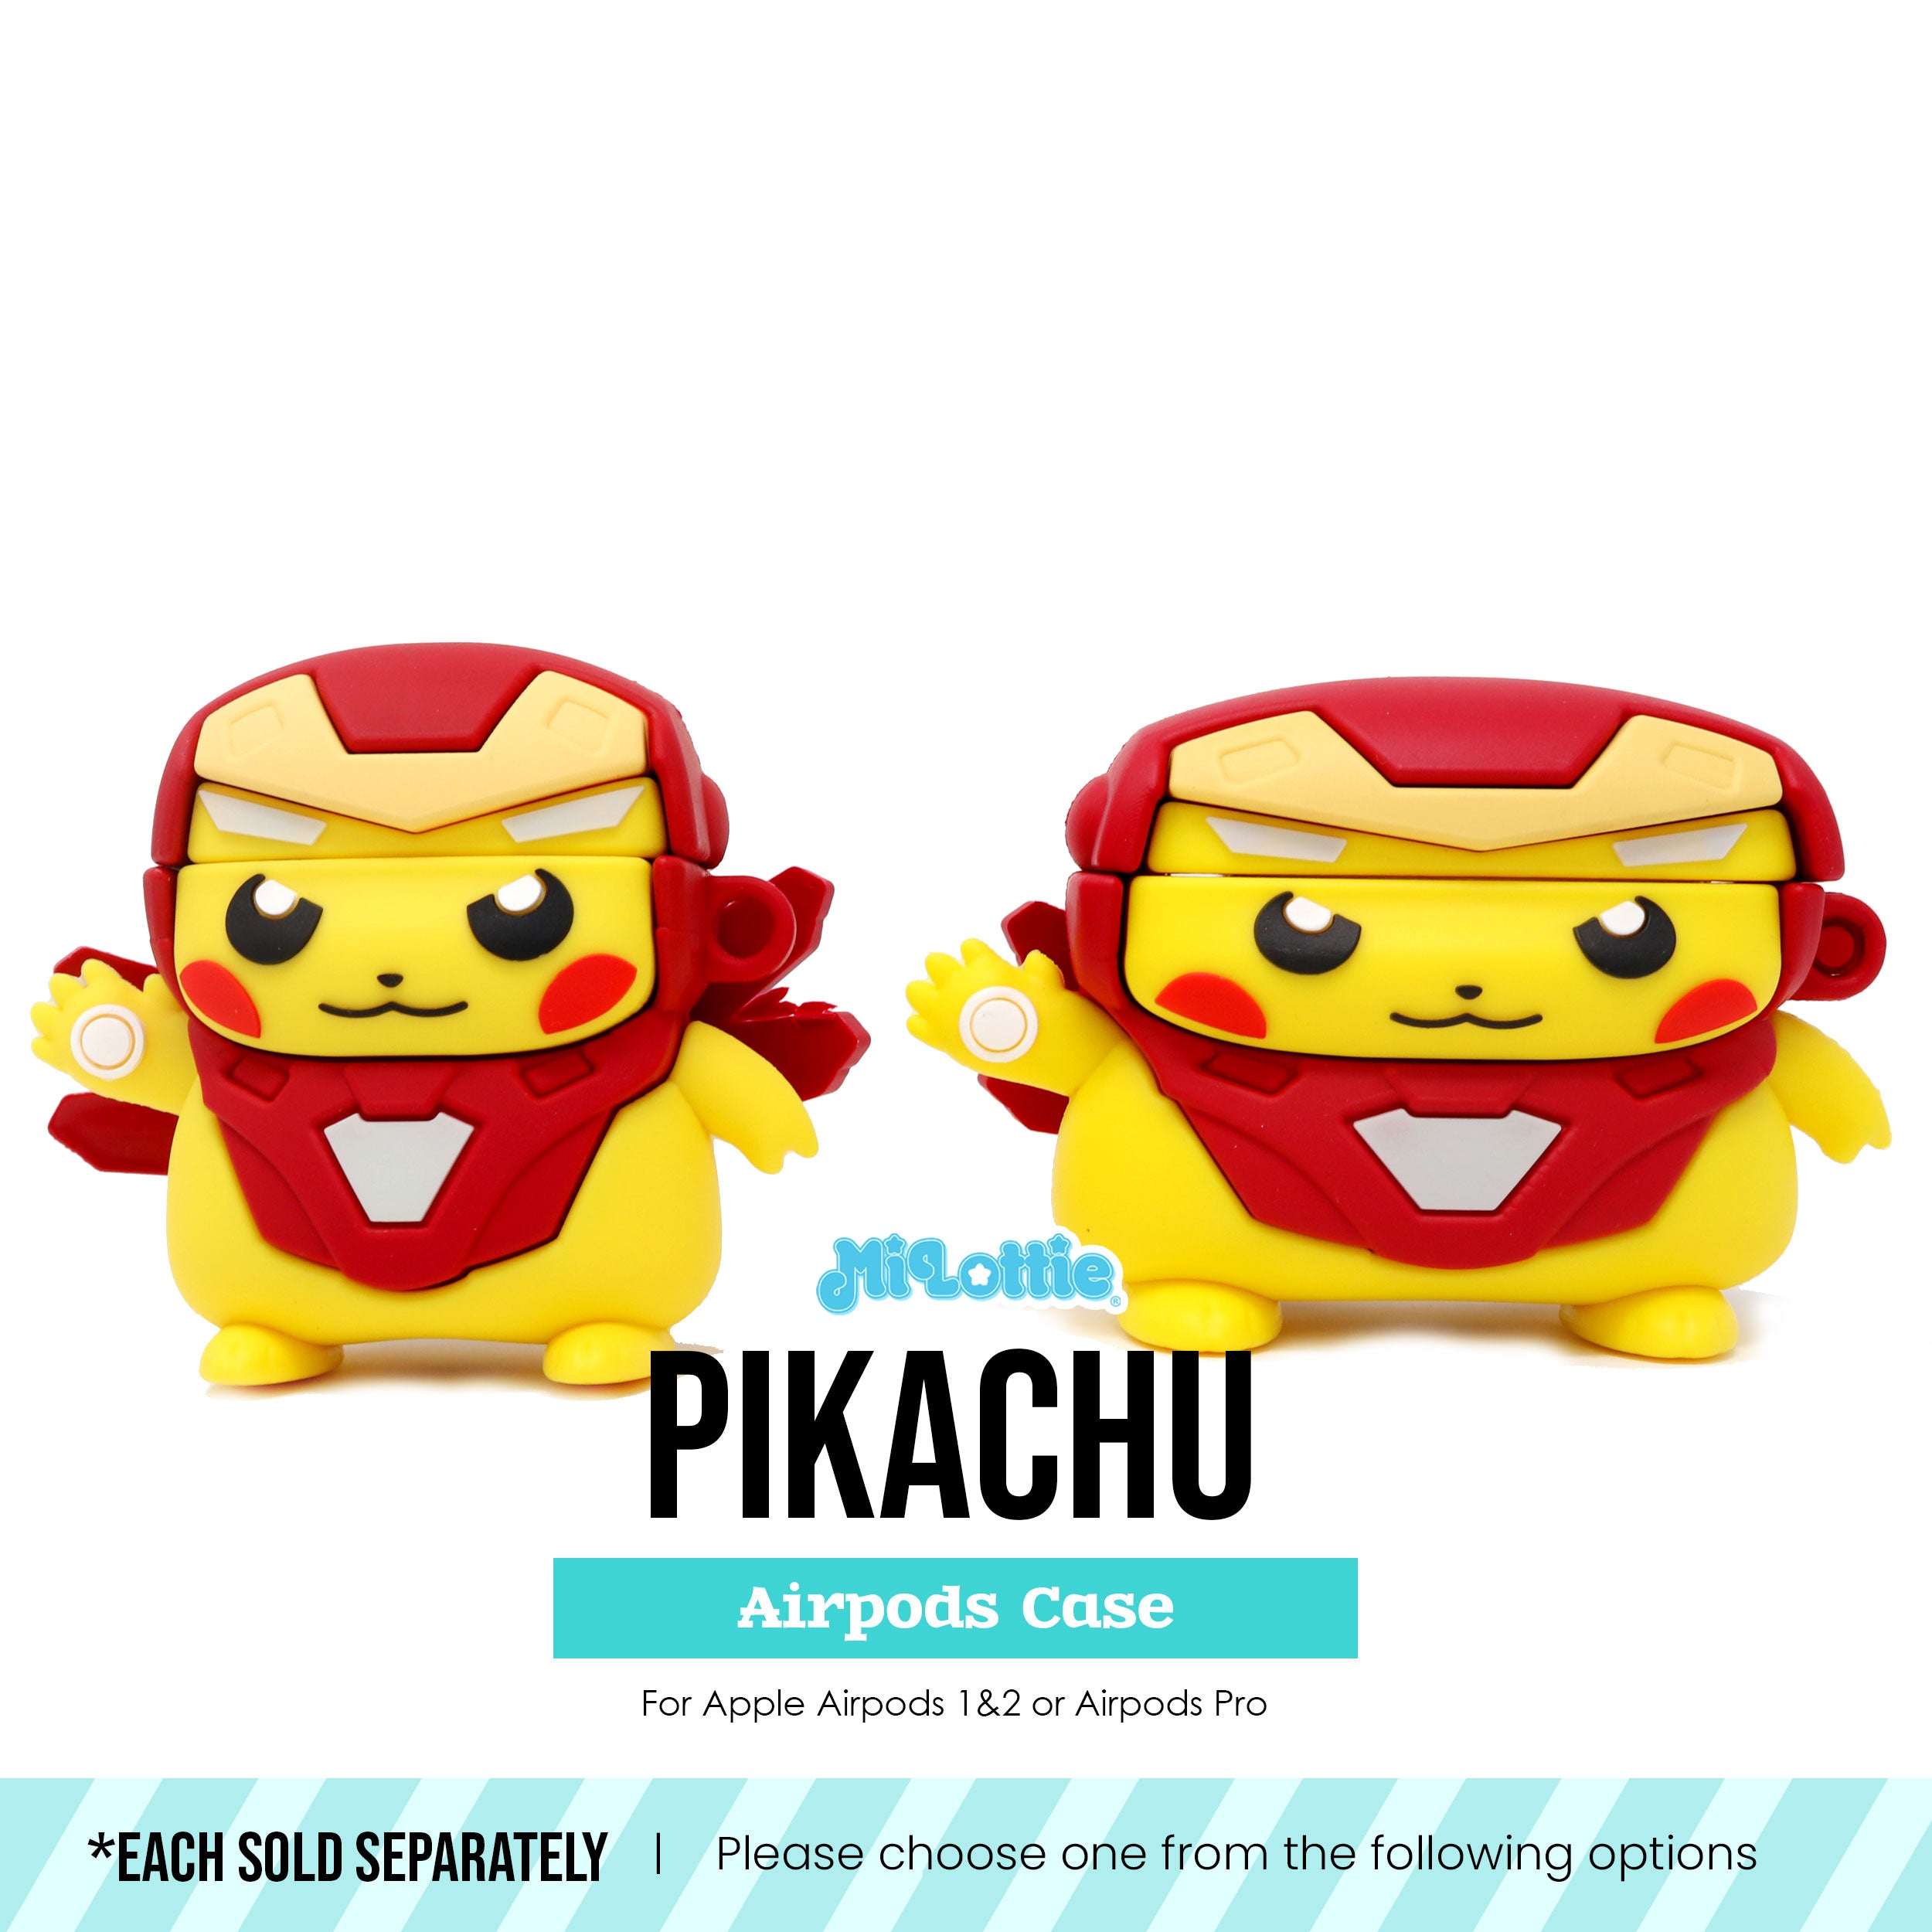 Pikachu in Iron man costume Pokemon Airpods Case